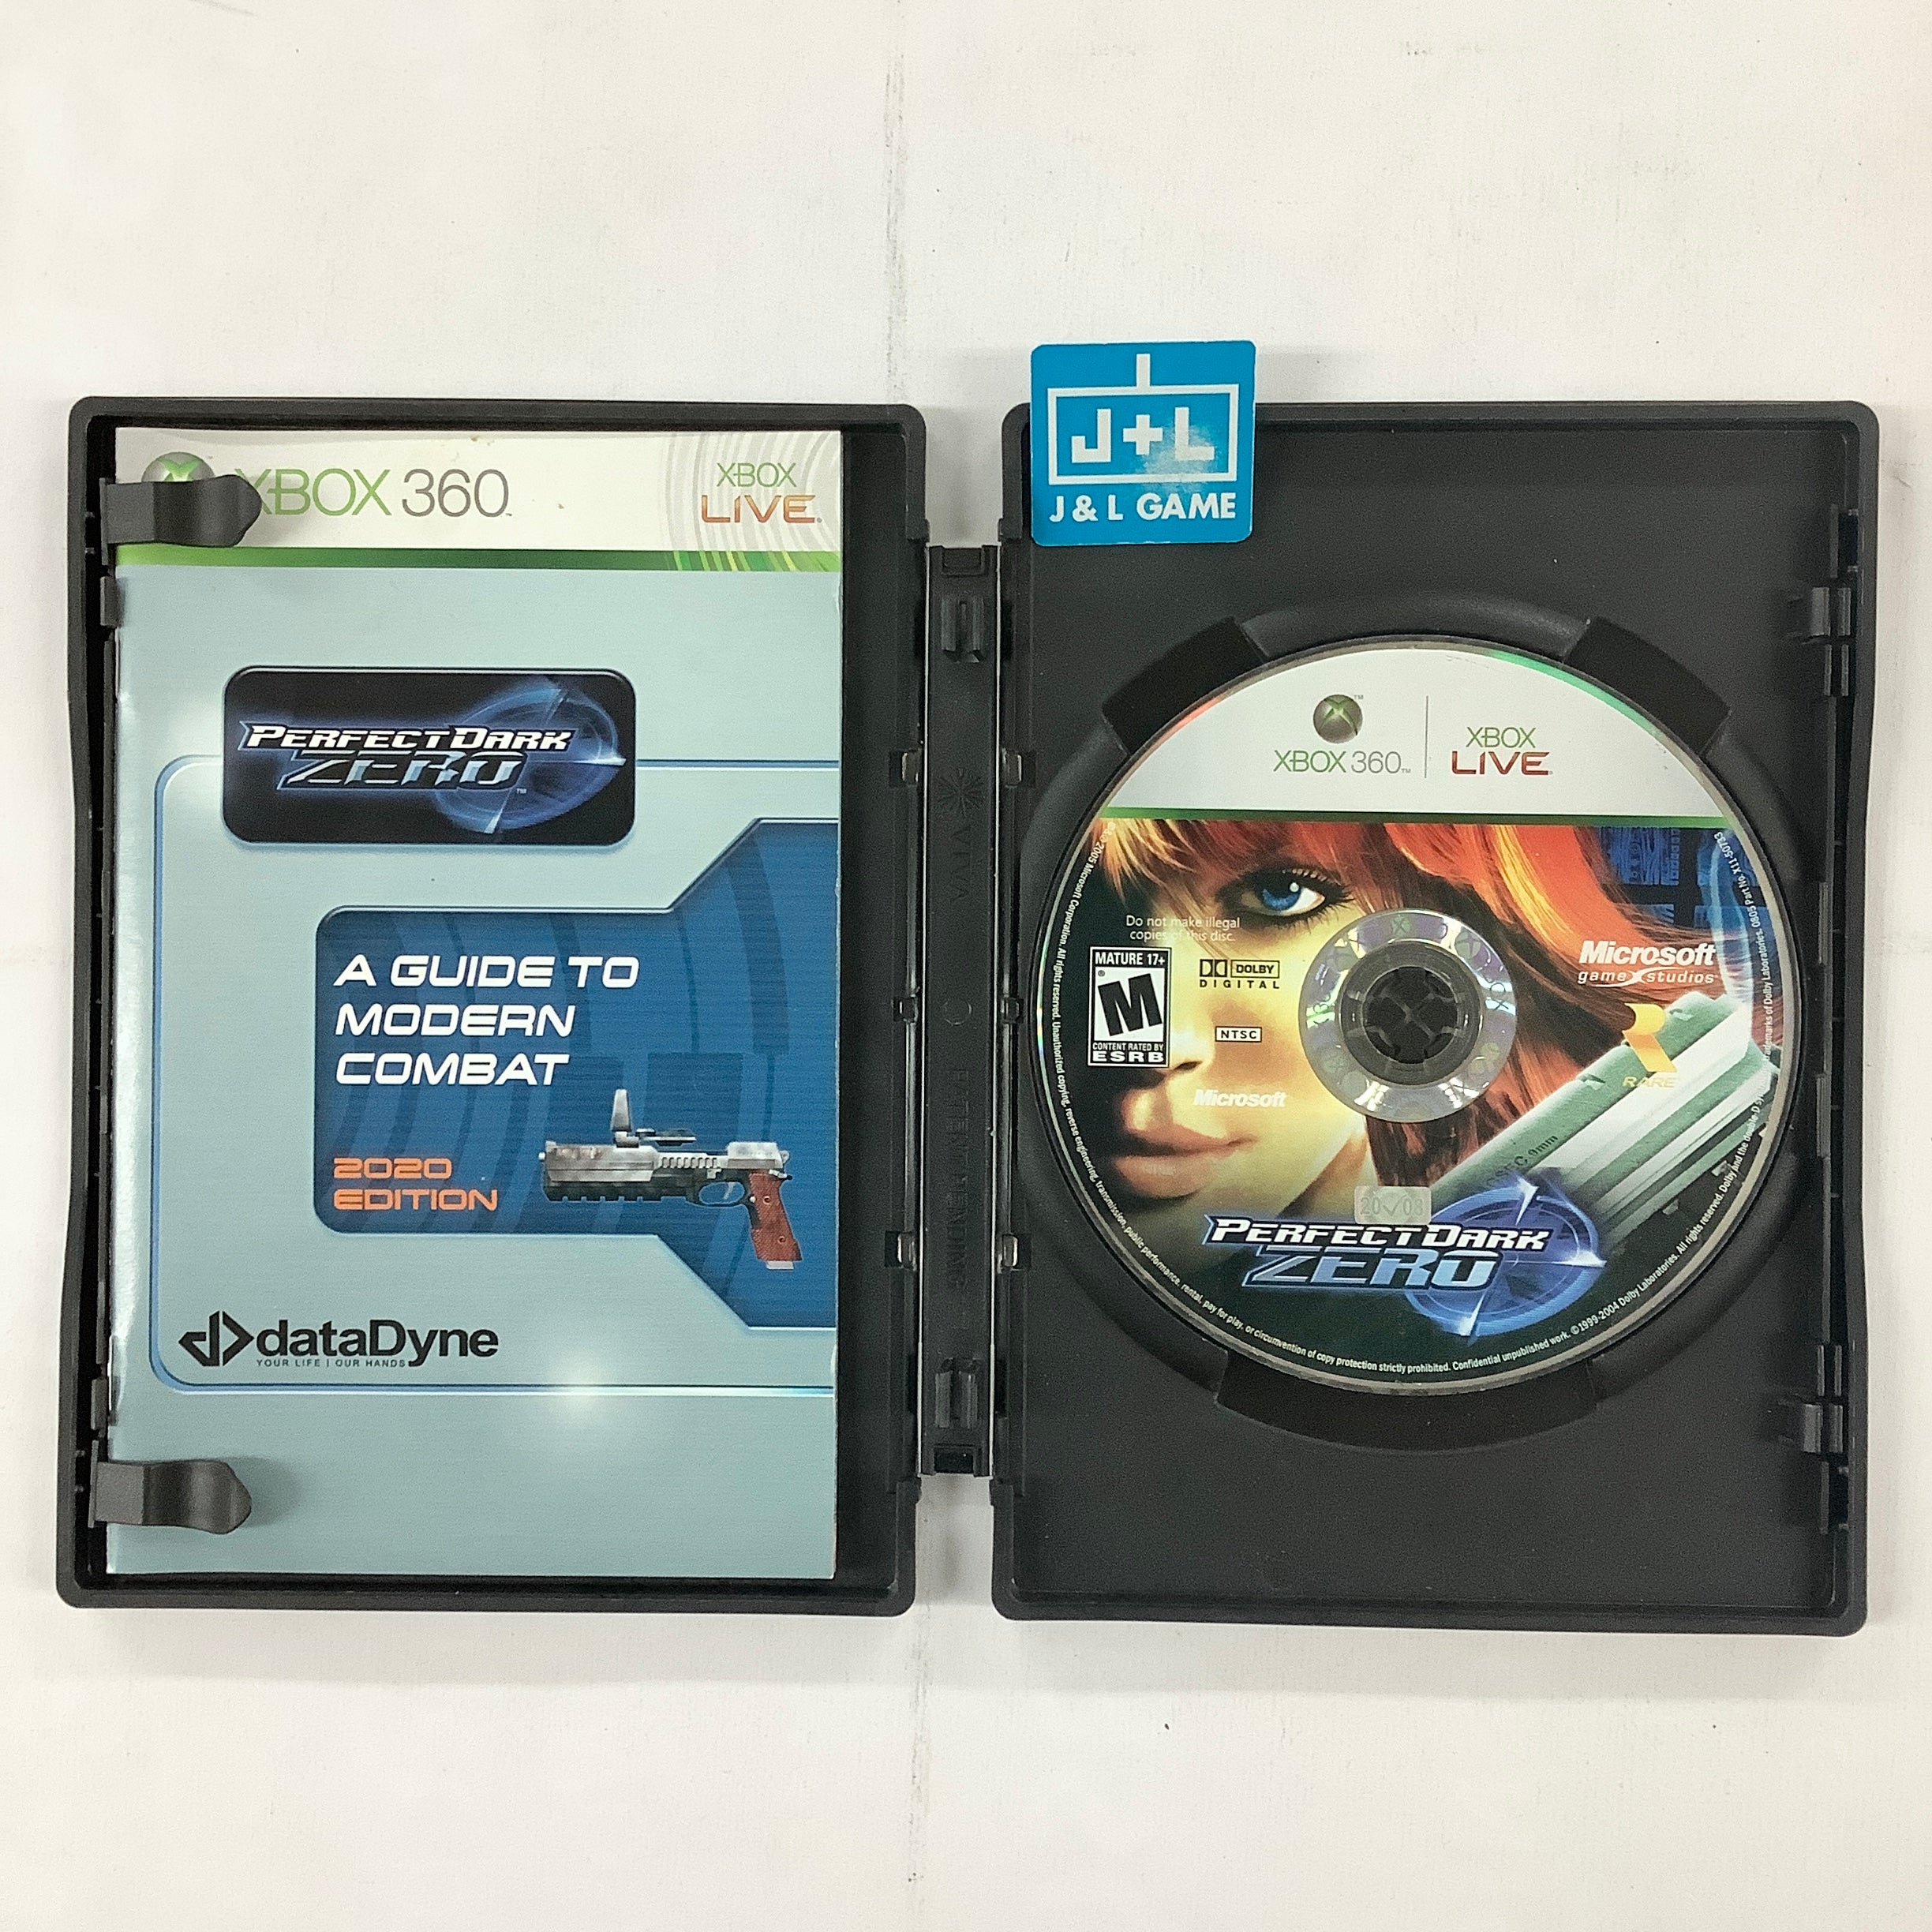 Perfect Dark Zero (Limited Edition) - Xbox 360 [Pre-Owned] Video Games Microsoft Game Studios   